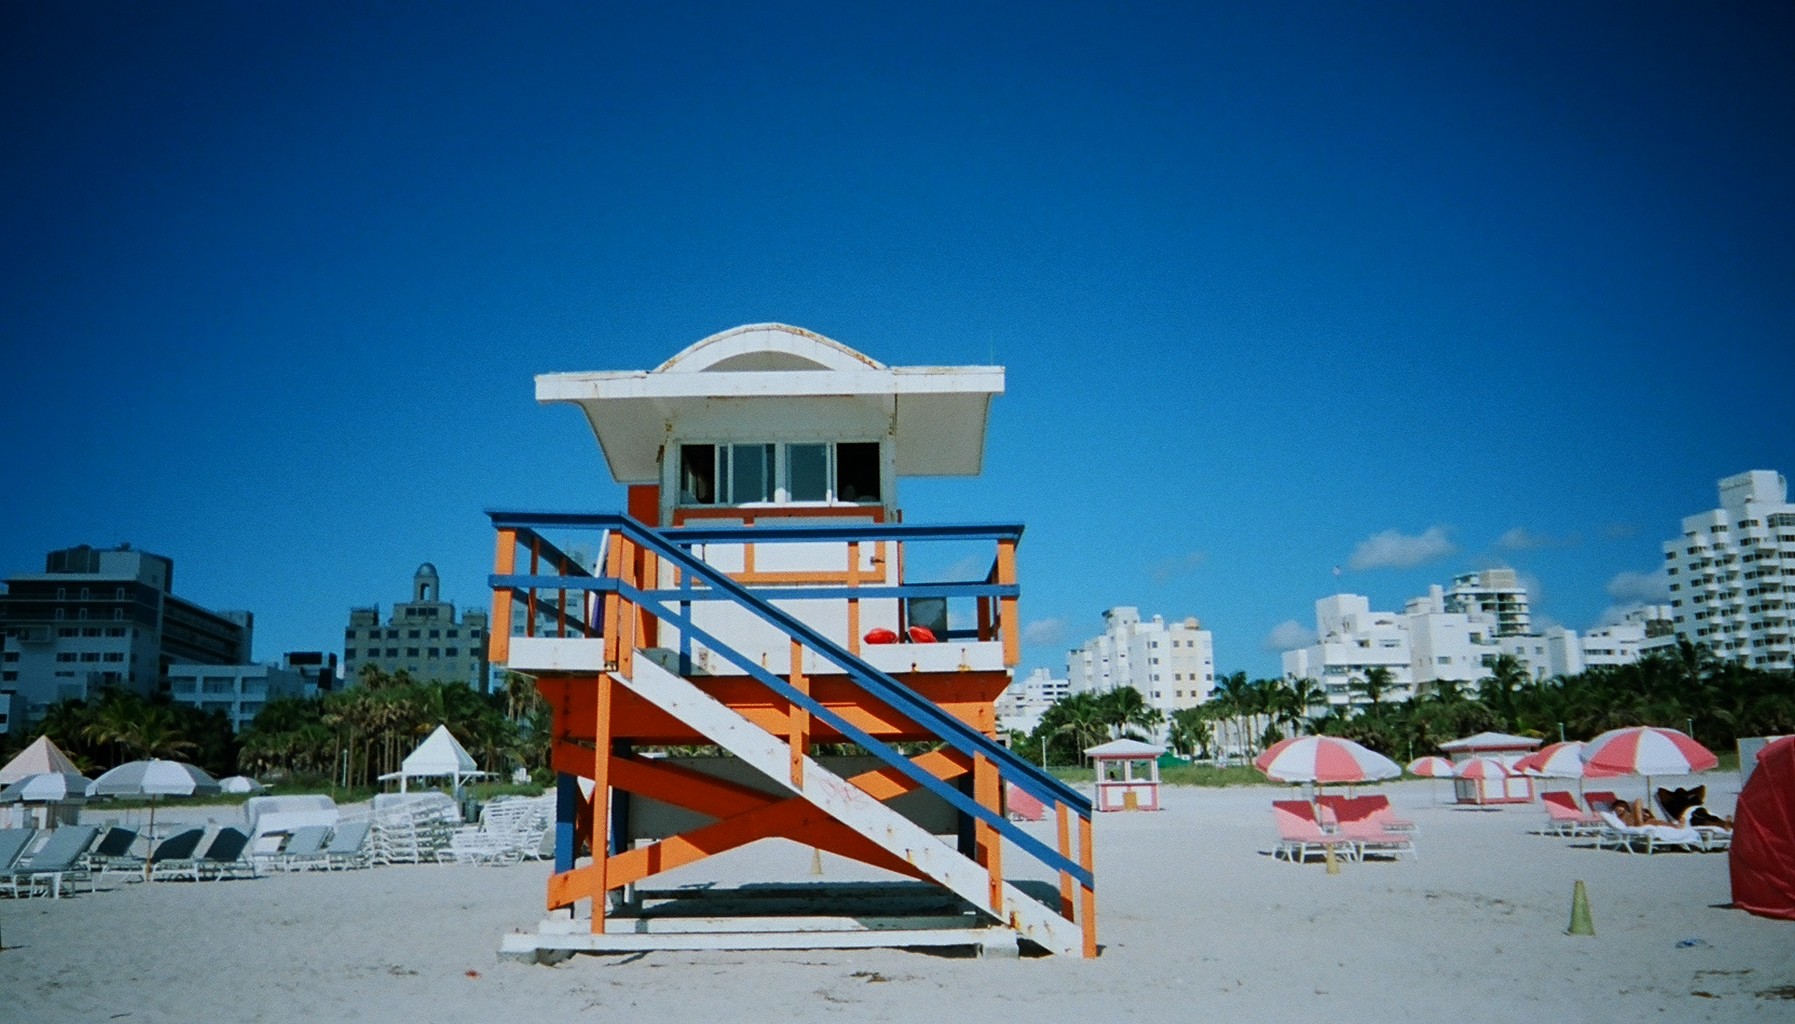 Art deco lifeguard stand in South Beach (Photo: Phillip Pessar via Flickr)